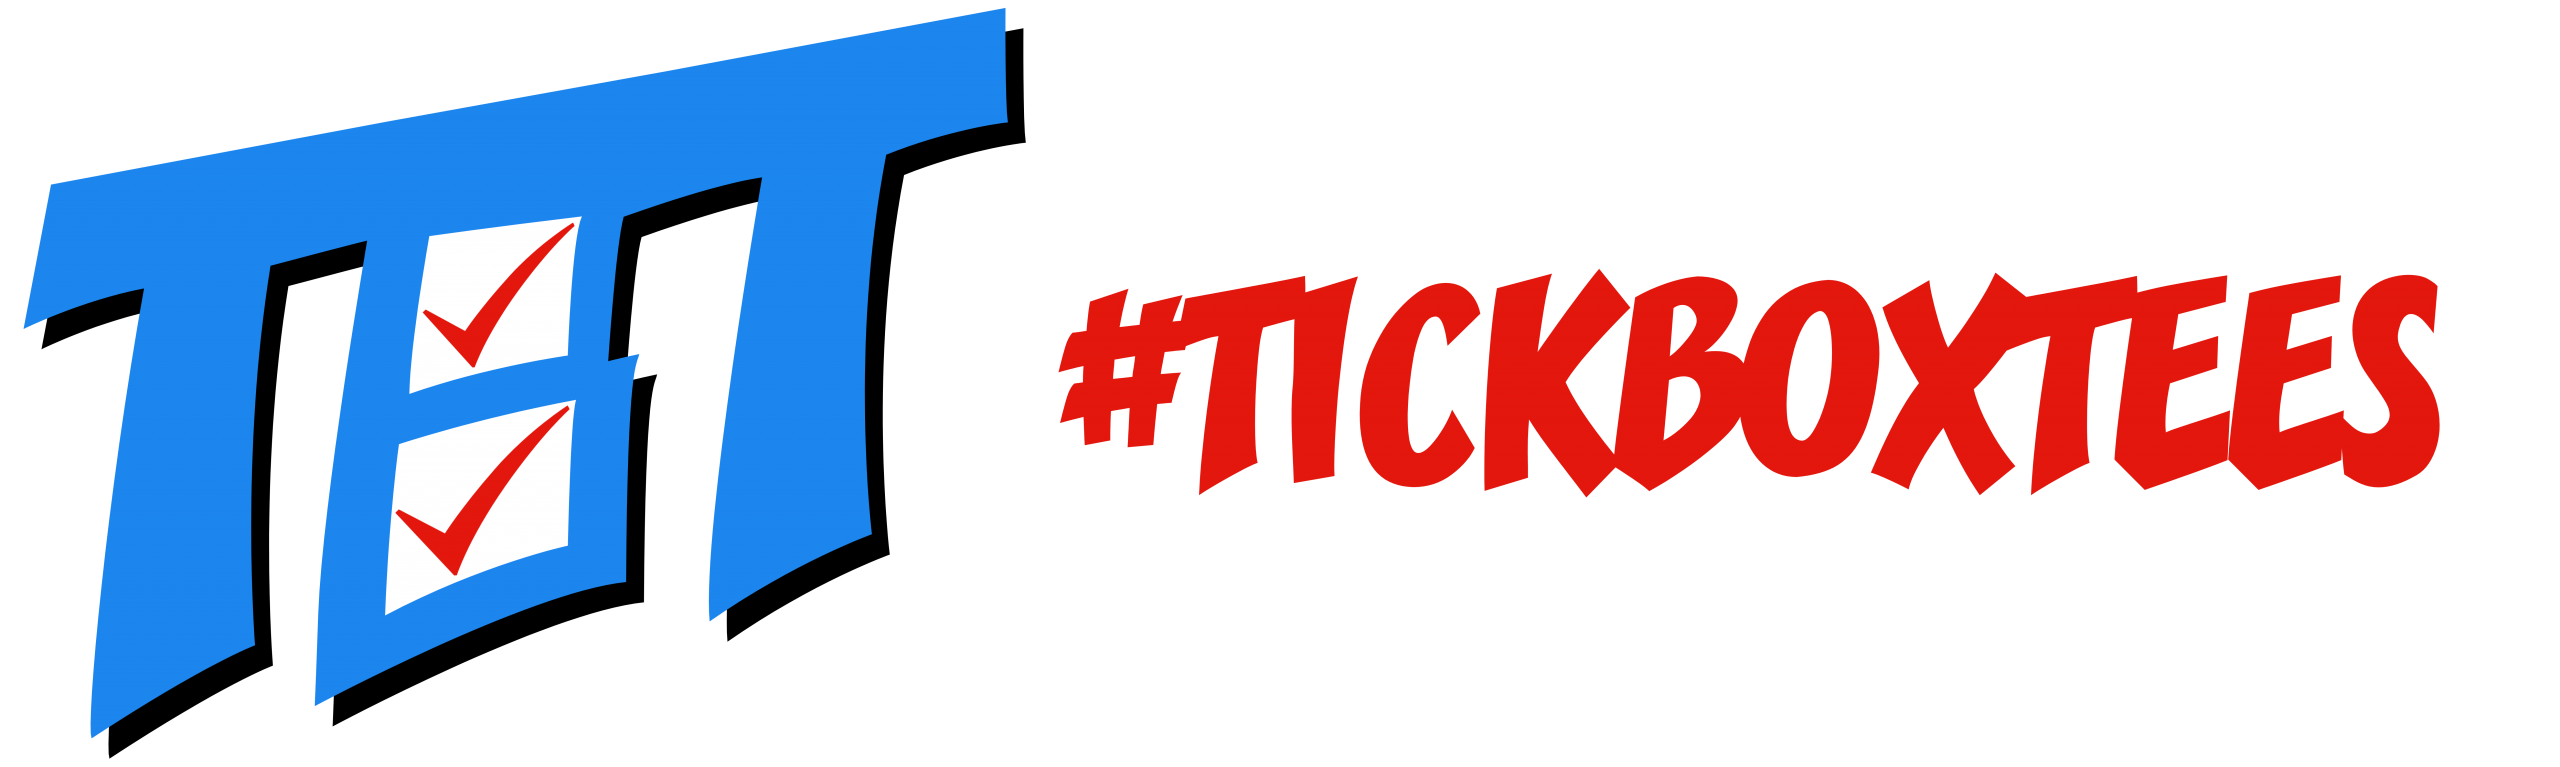 Tick Box Tees Logo